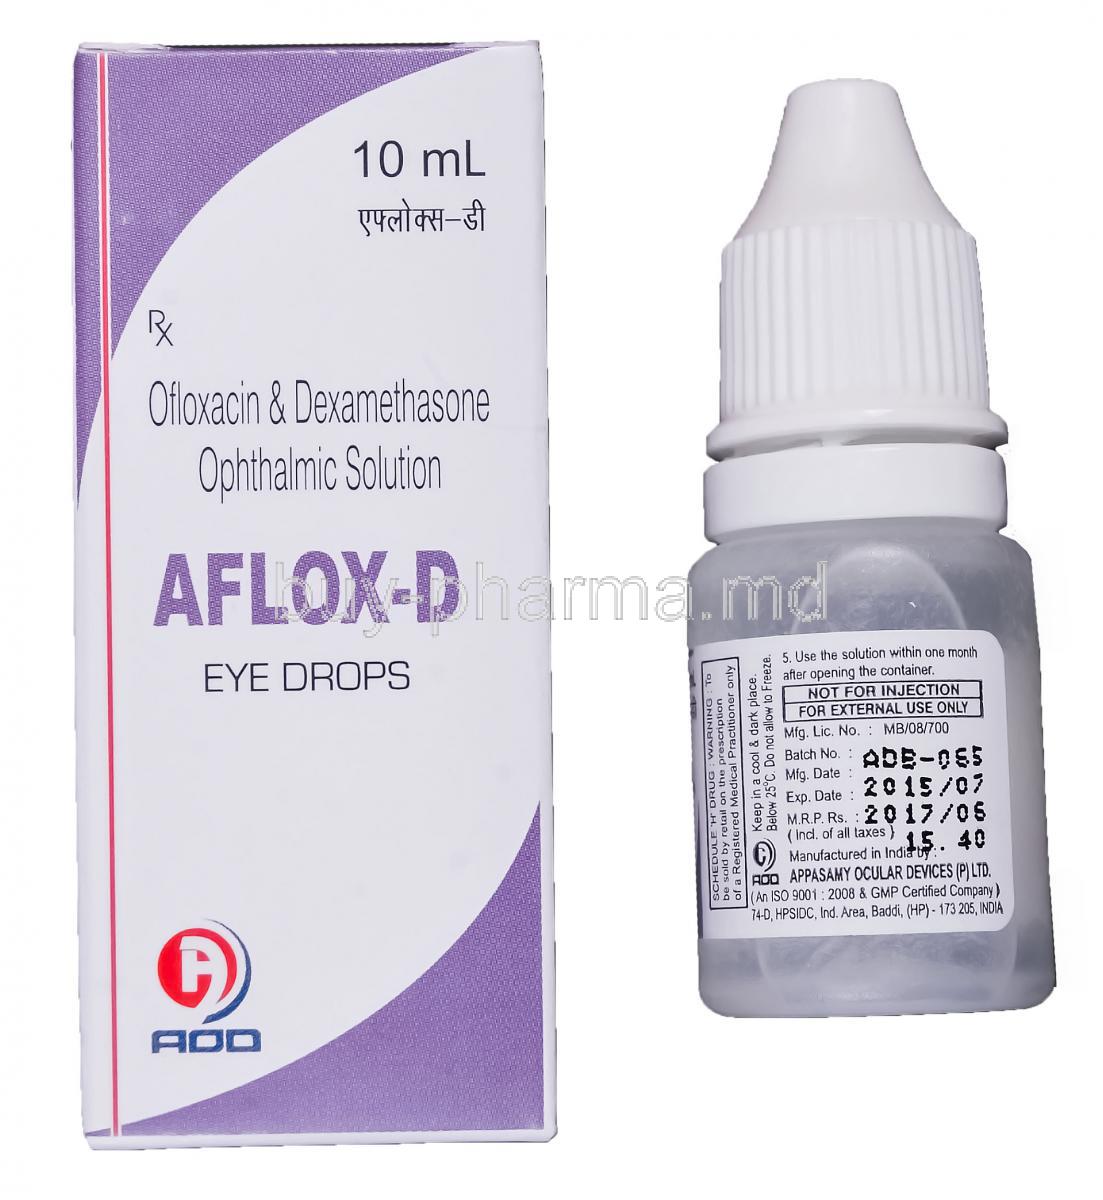 Aflox-D Eye Drops, Ofloxacin and Dexamethasone Ophthalmic Solution 10ml